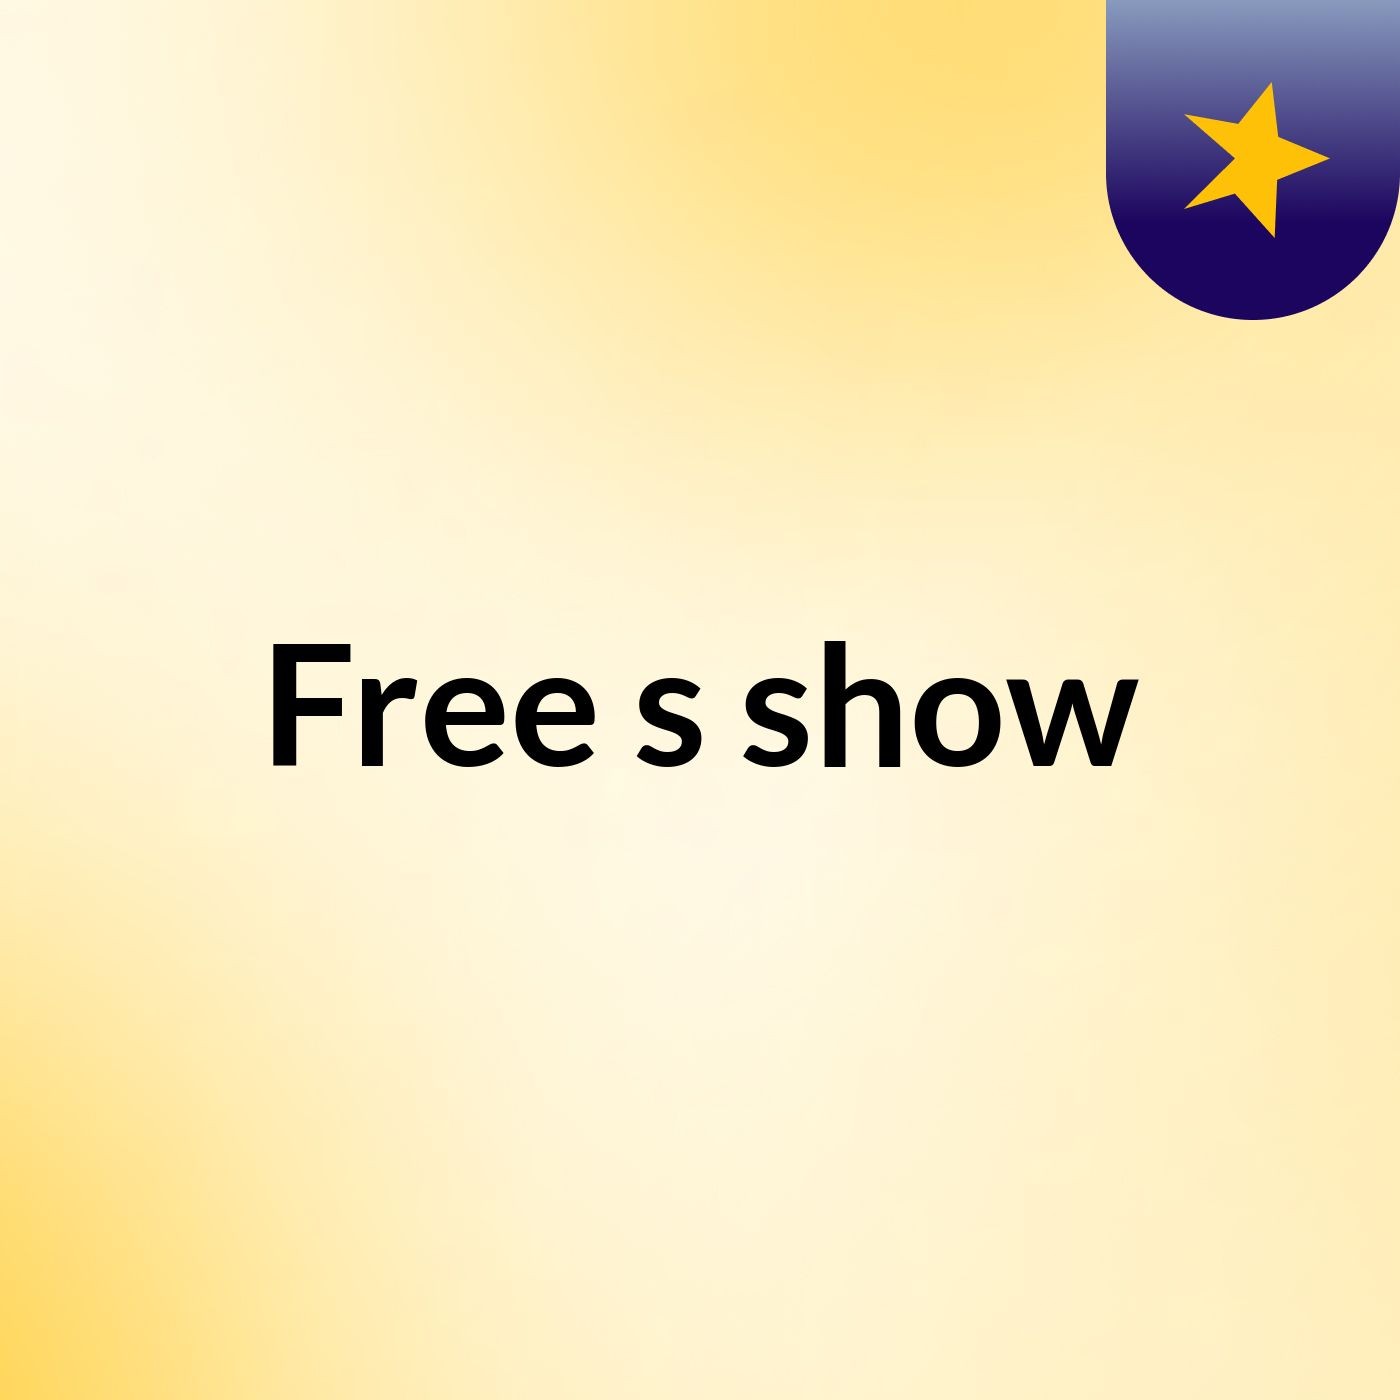 Free's show